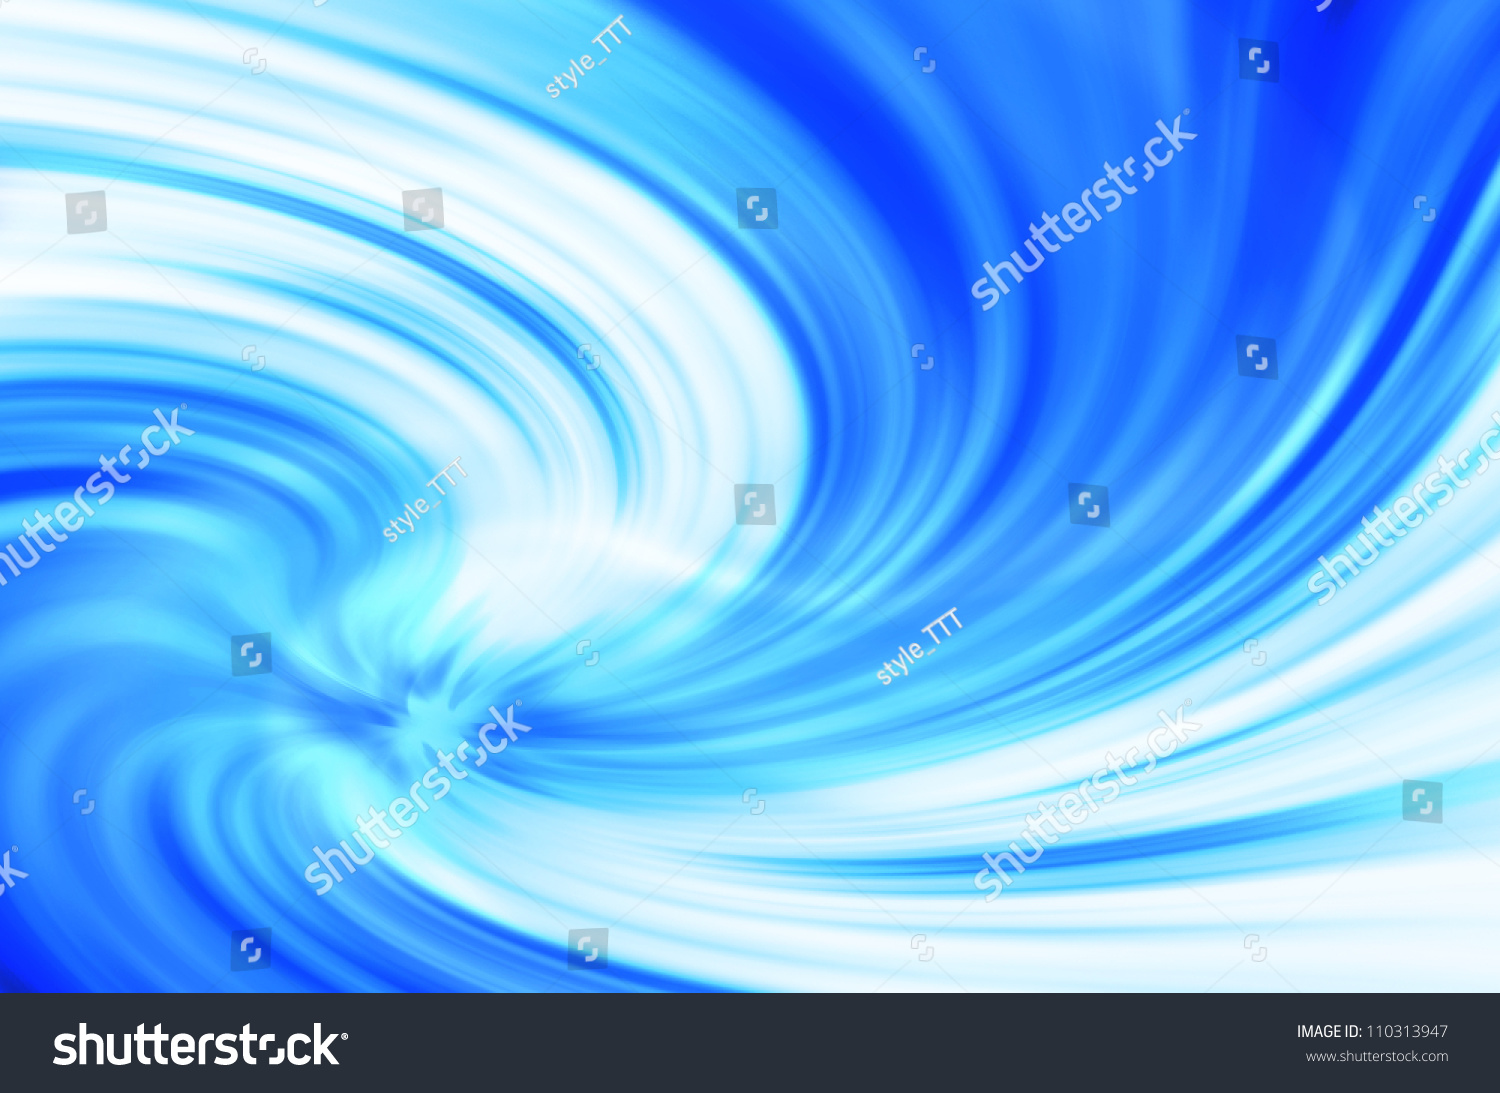 Abstract Swirl Blue Design. Stock Photo 110313947 : Shutterstock